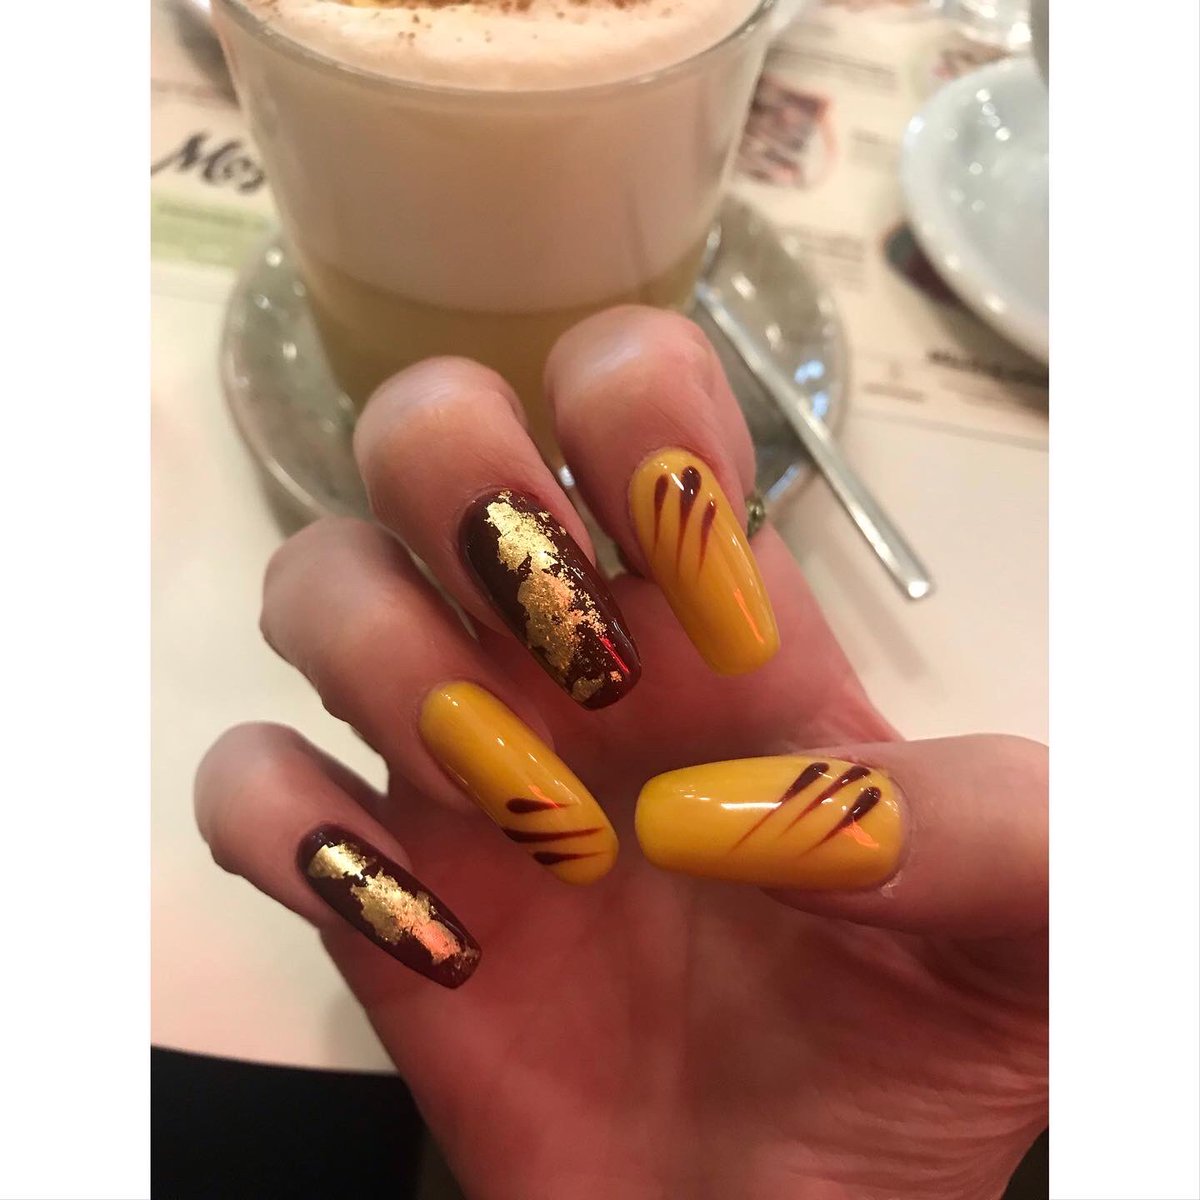 #nails #gelnails #manicure #nailideas #gelnailideas #gelnailinspo #nailinspo #manicureideas #manicureinspo #lifeofmeshty #meshtysgelnails #gold #brown #yellow #nailsoftwitter #manicureoftwitter #gelnailsoftwitter #yellowmanicure #brownmanicure 
🐻🍯🍫🐝